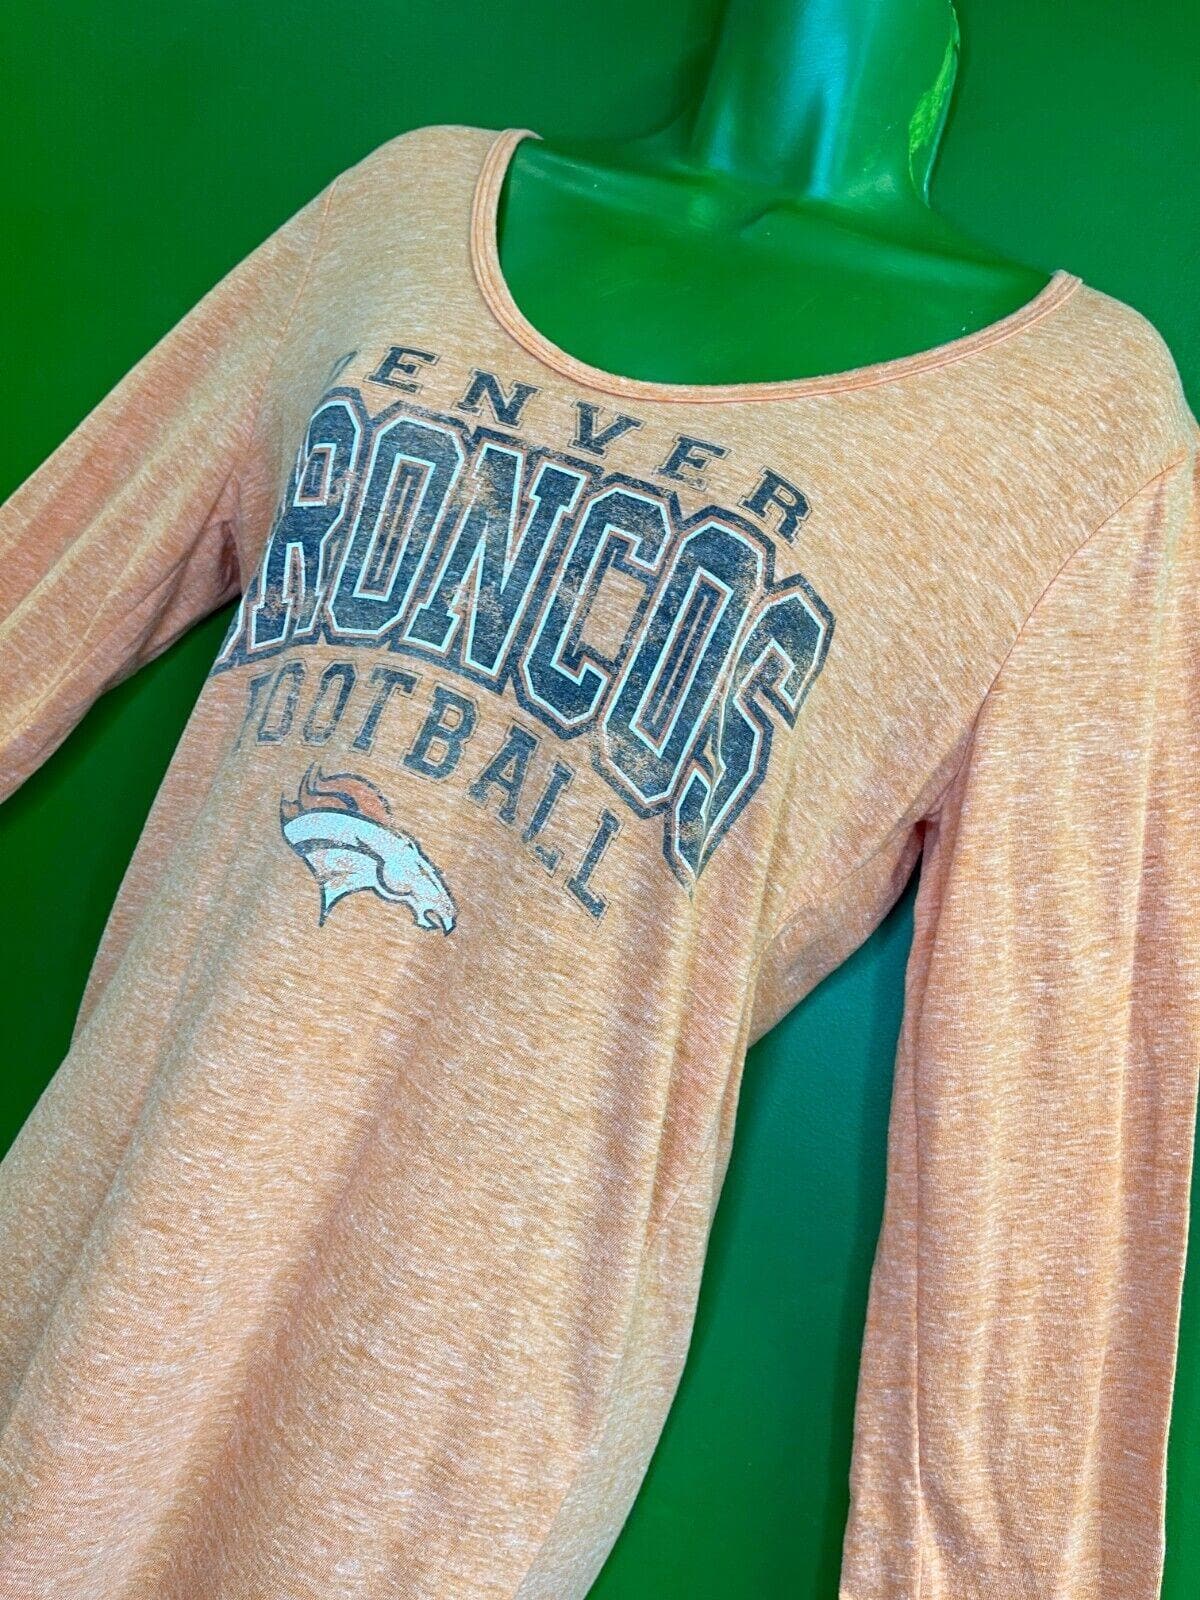 NFL Denver Broncos Heathered L-S T-Shirt Women's Medium 34"